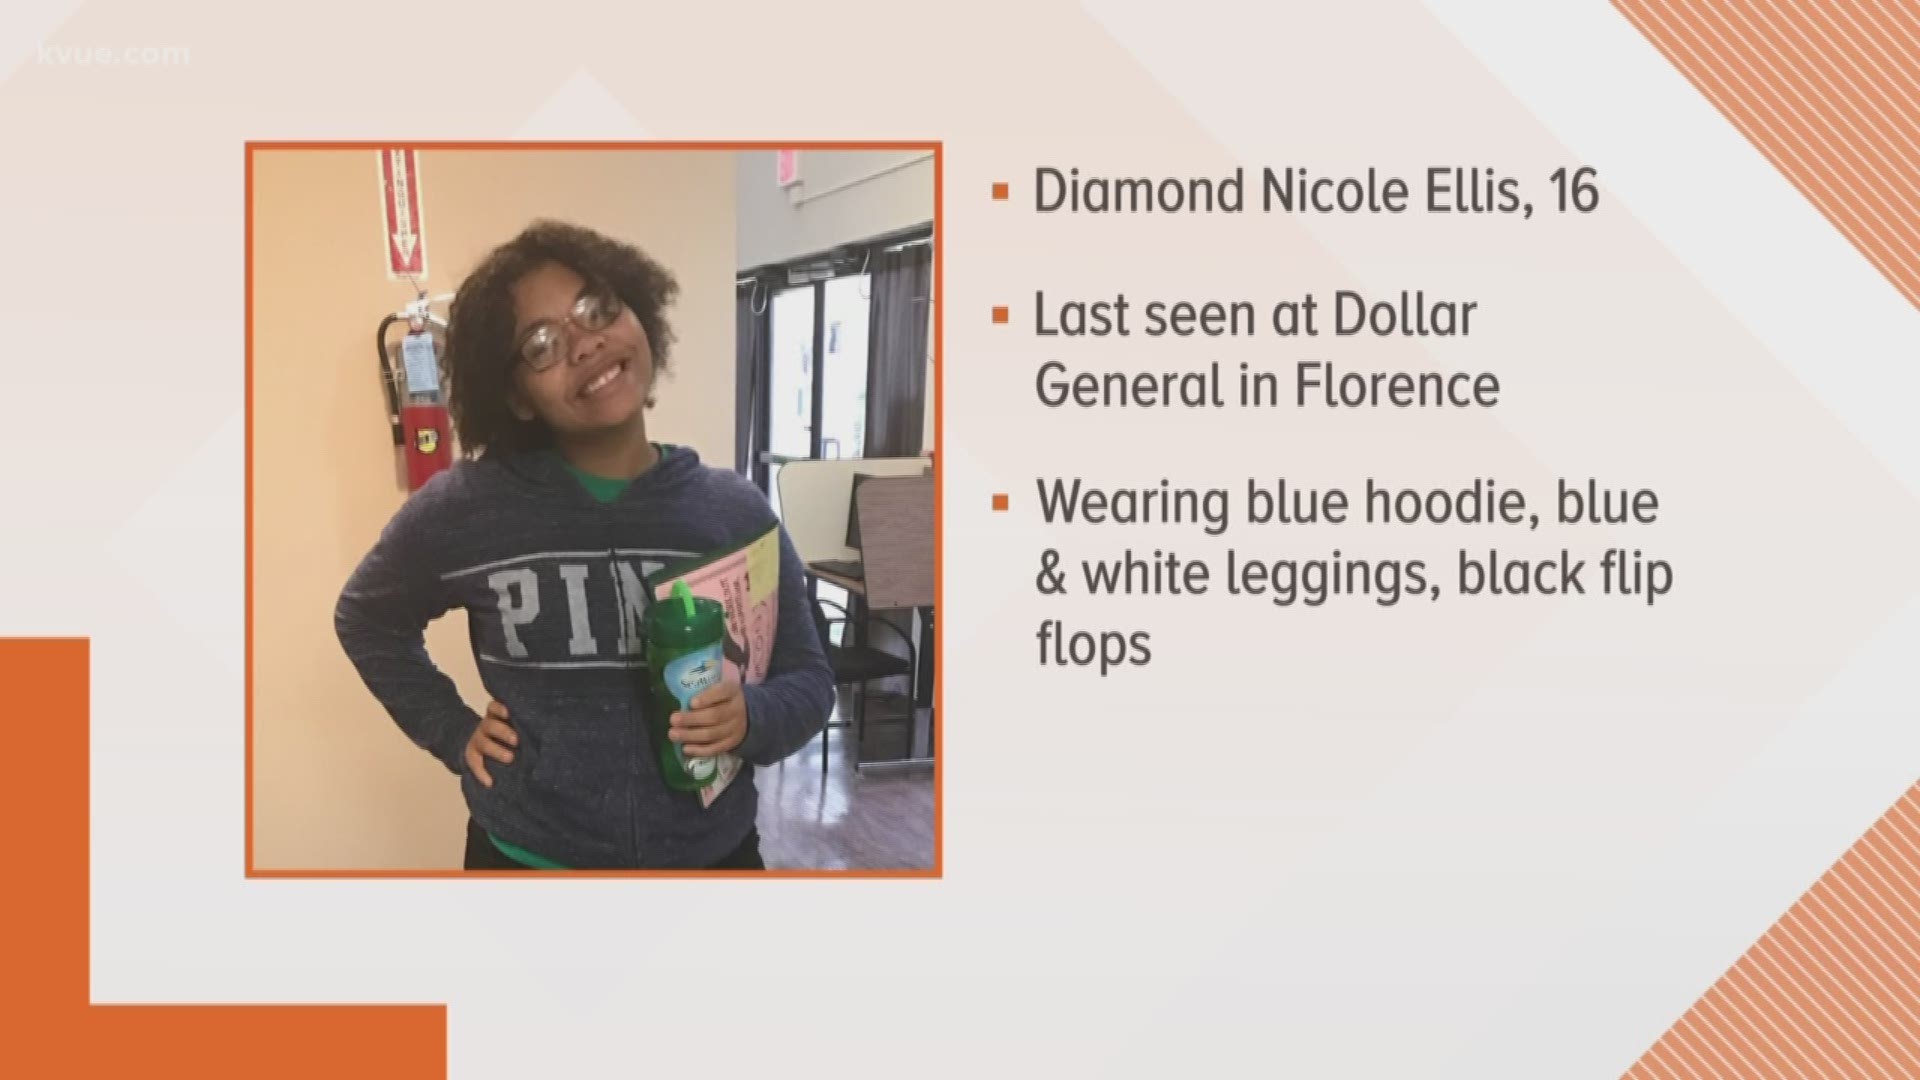 Diamond Nicole Ellis was last seen at a Dollar General in Florence.